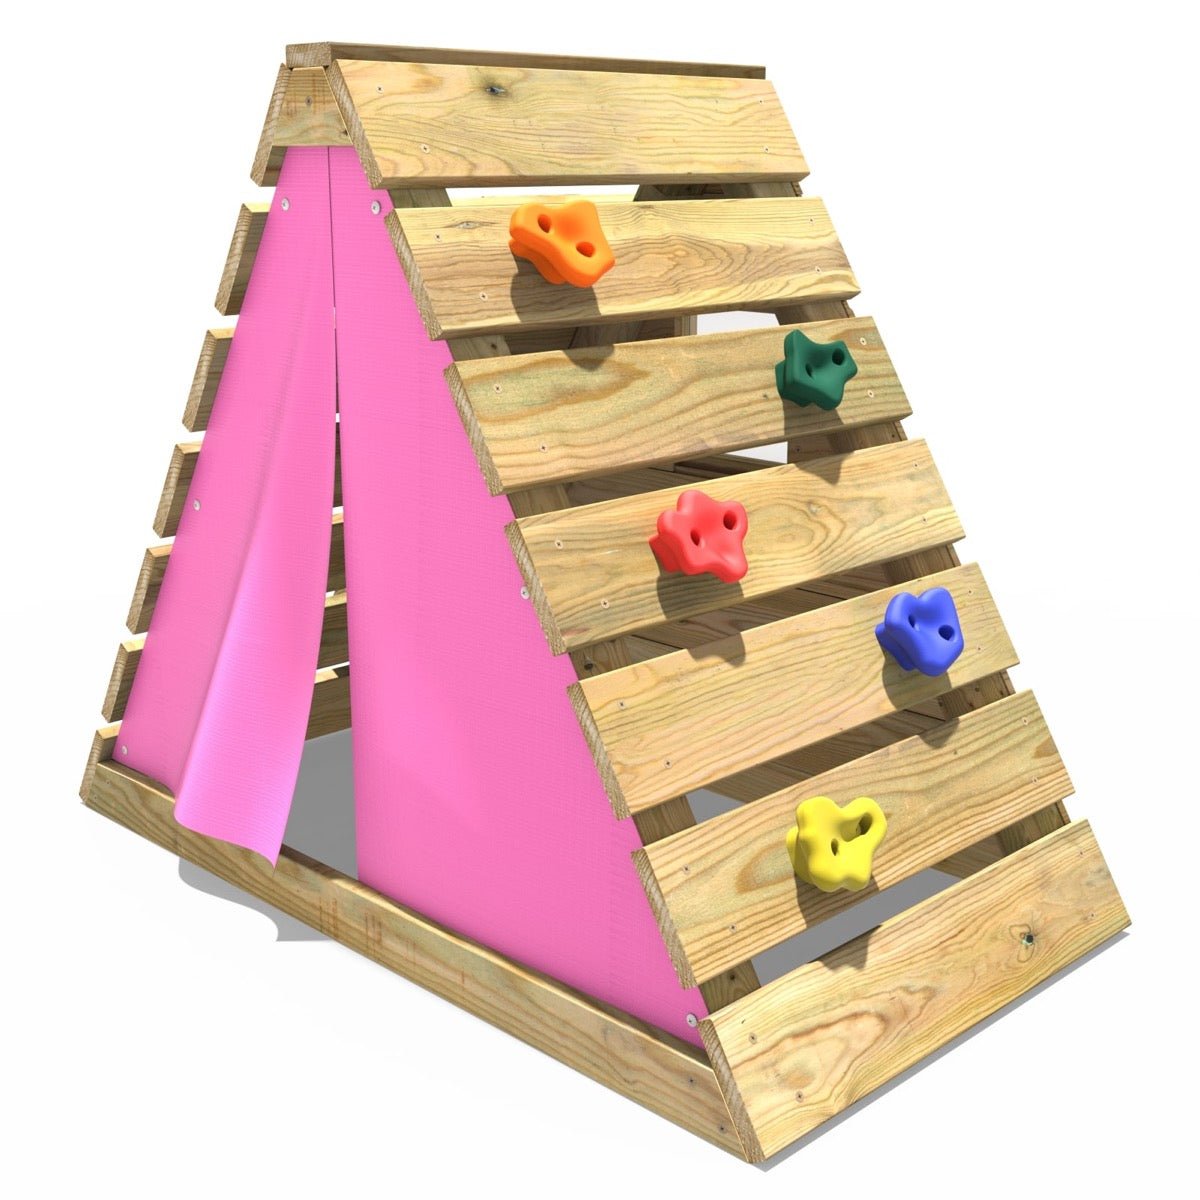 Rebo Mini Wooden Climbing Pyramid Adventure Playset - Pink